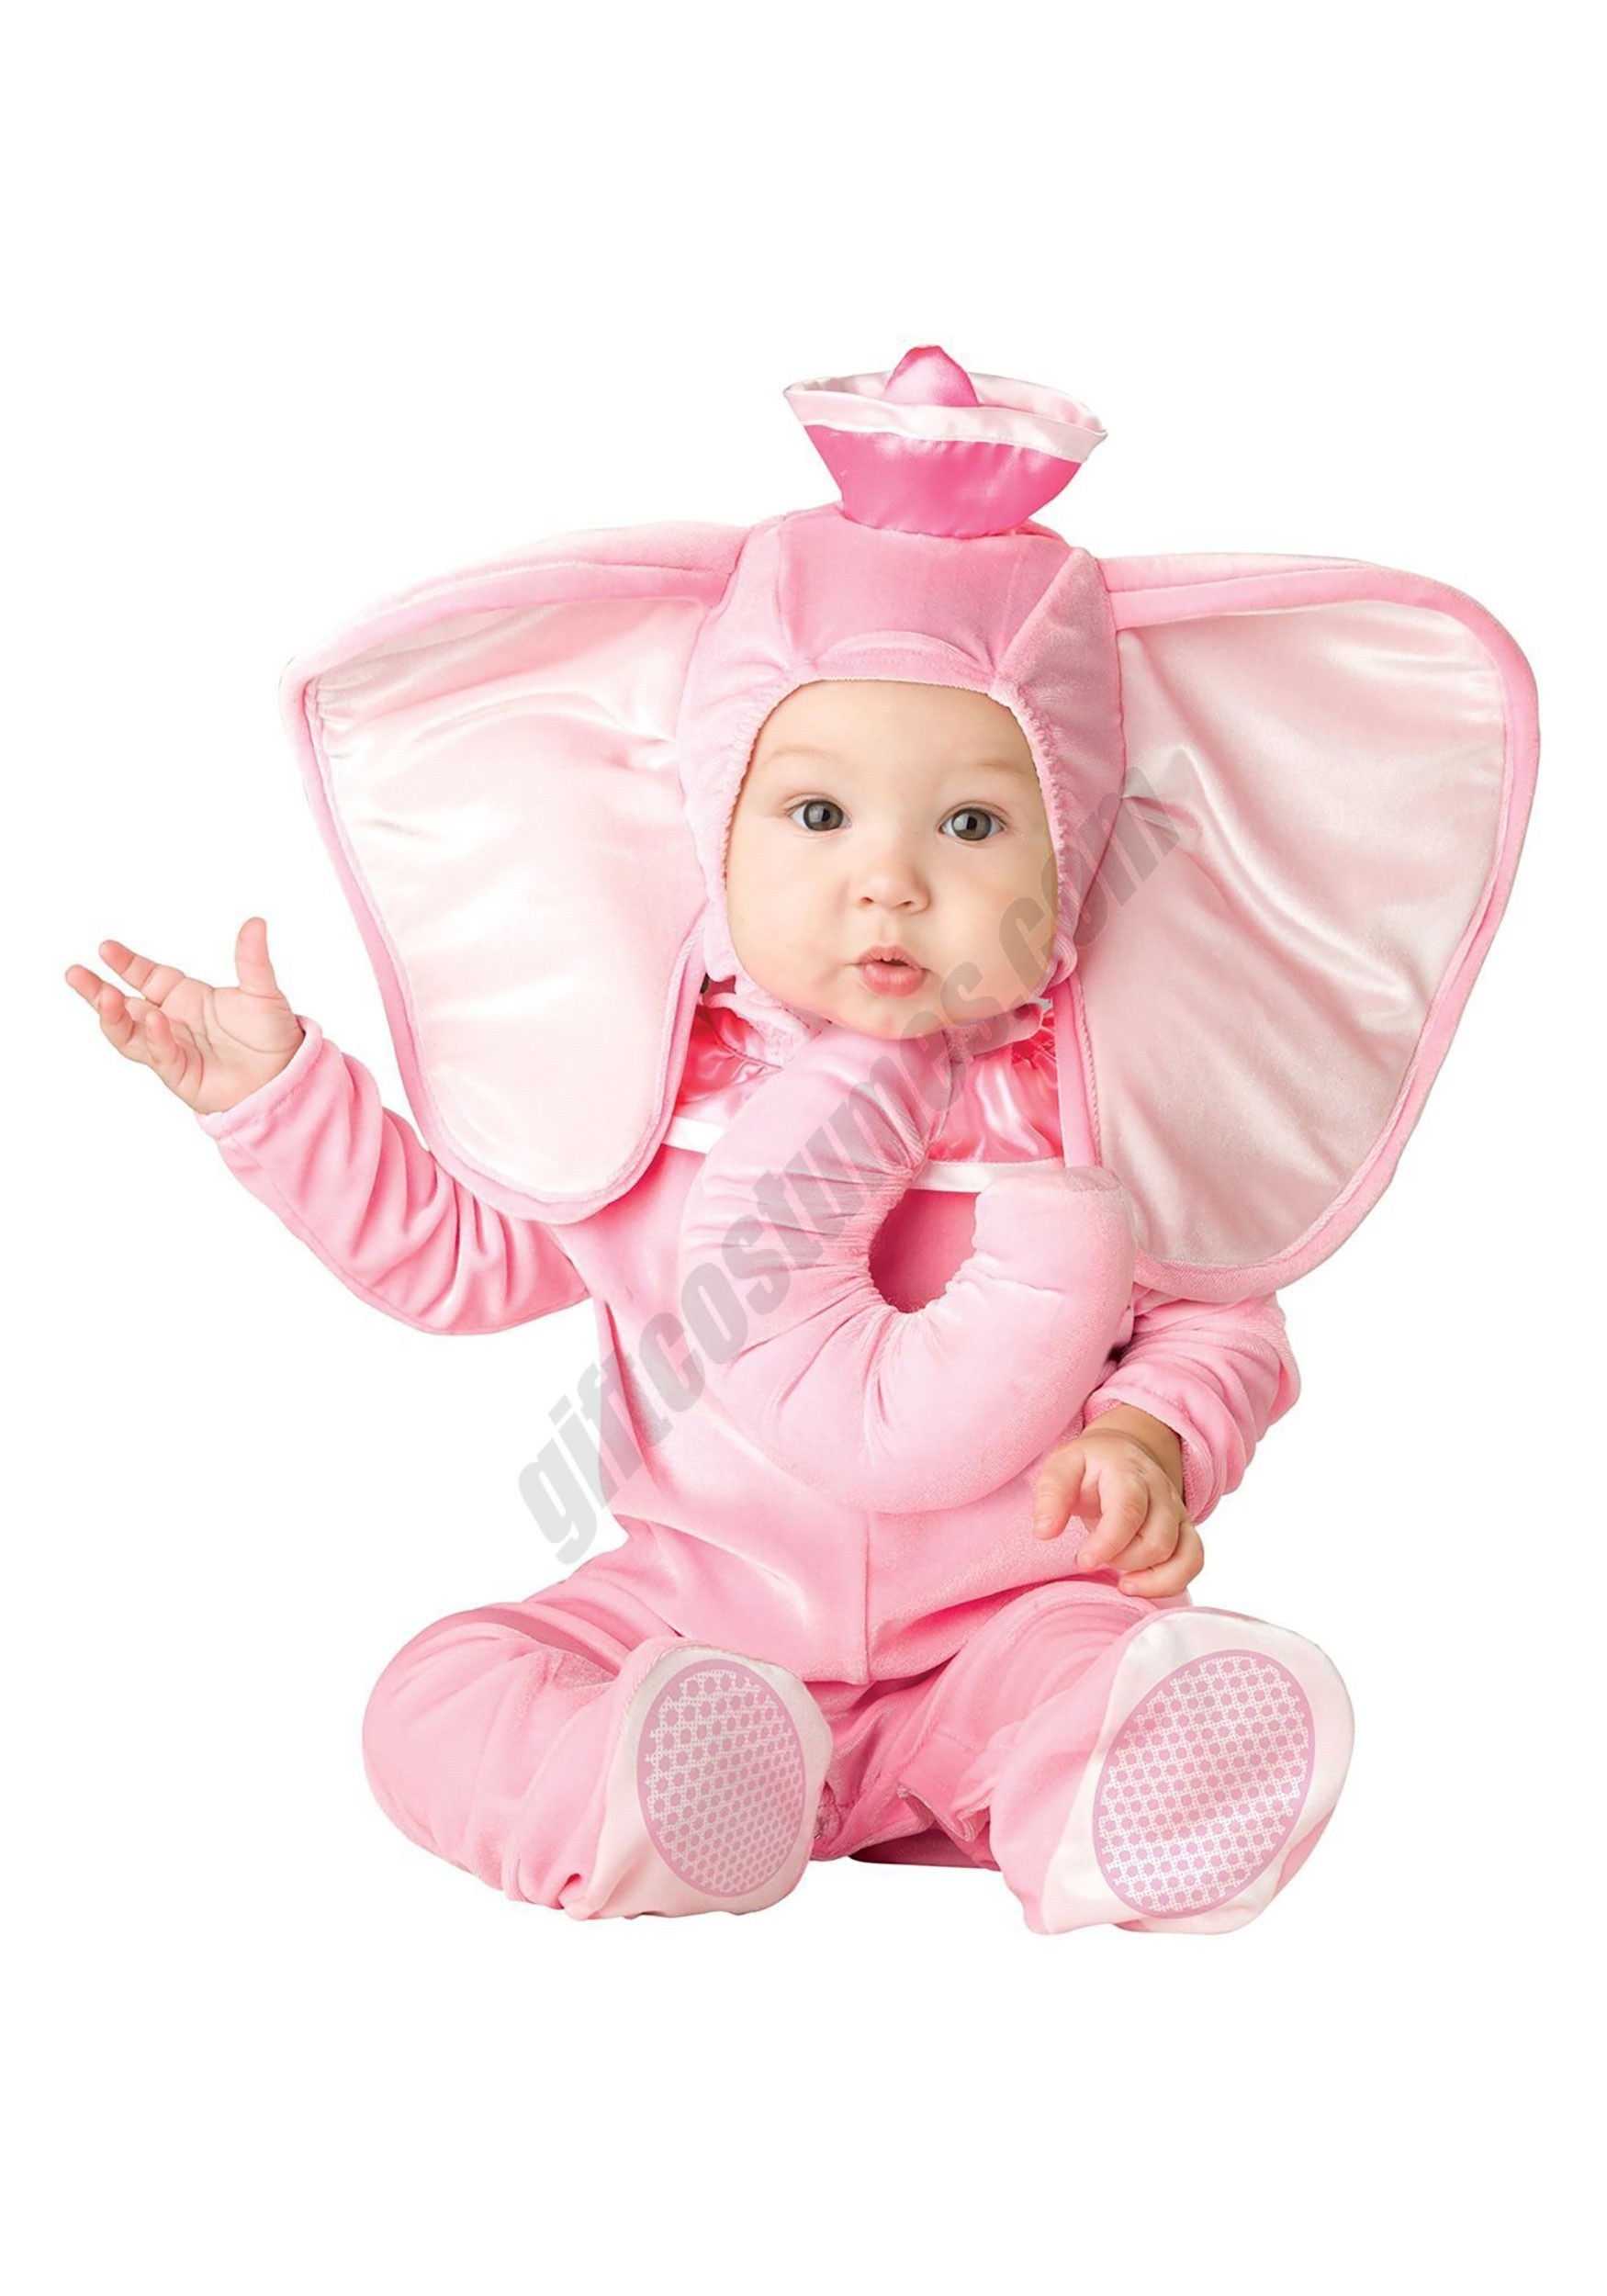 Infant Pink Elephant Costume Promotions - Infant Pink Elephant Costume Promotions